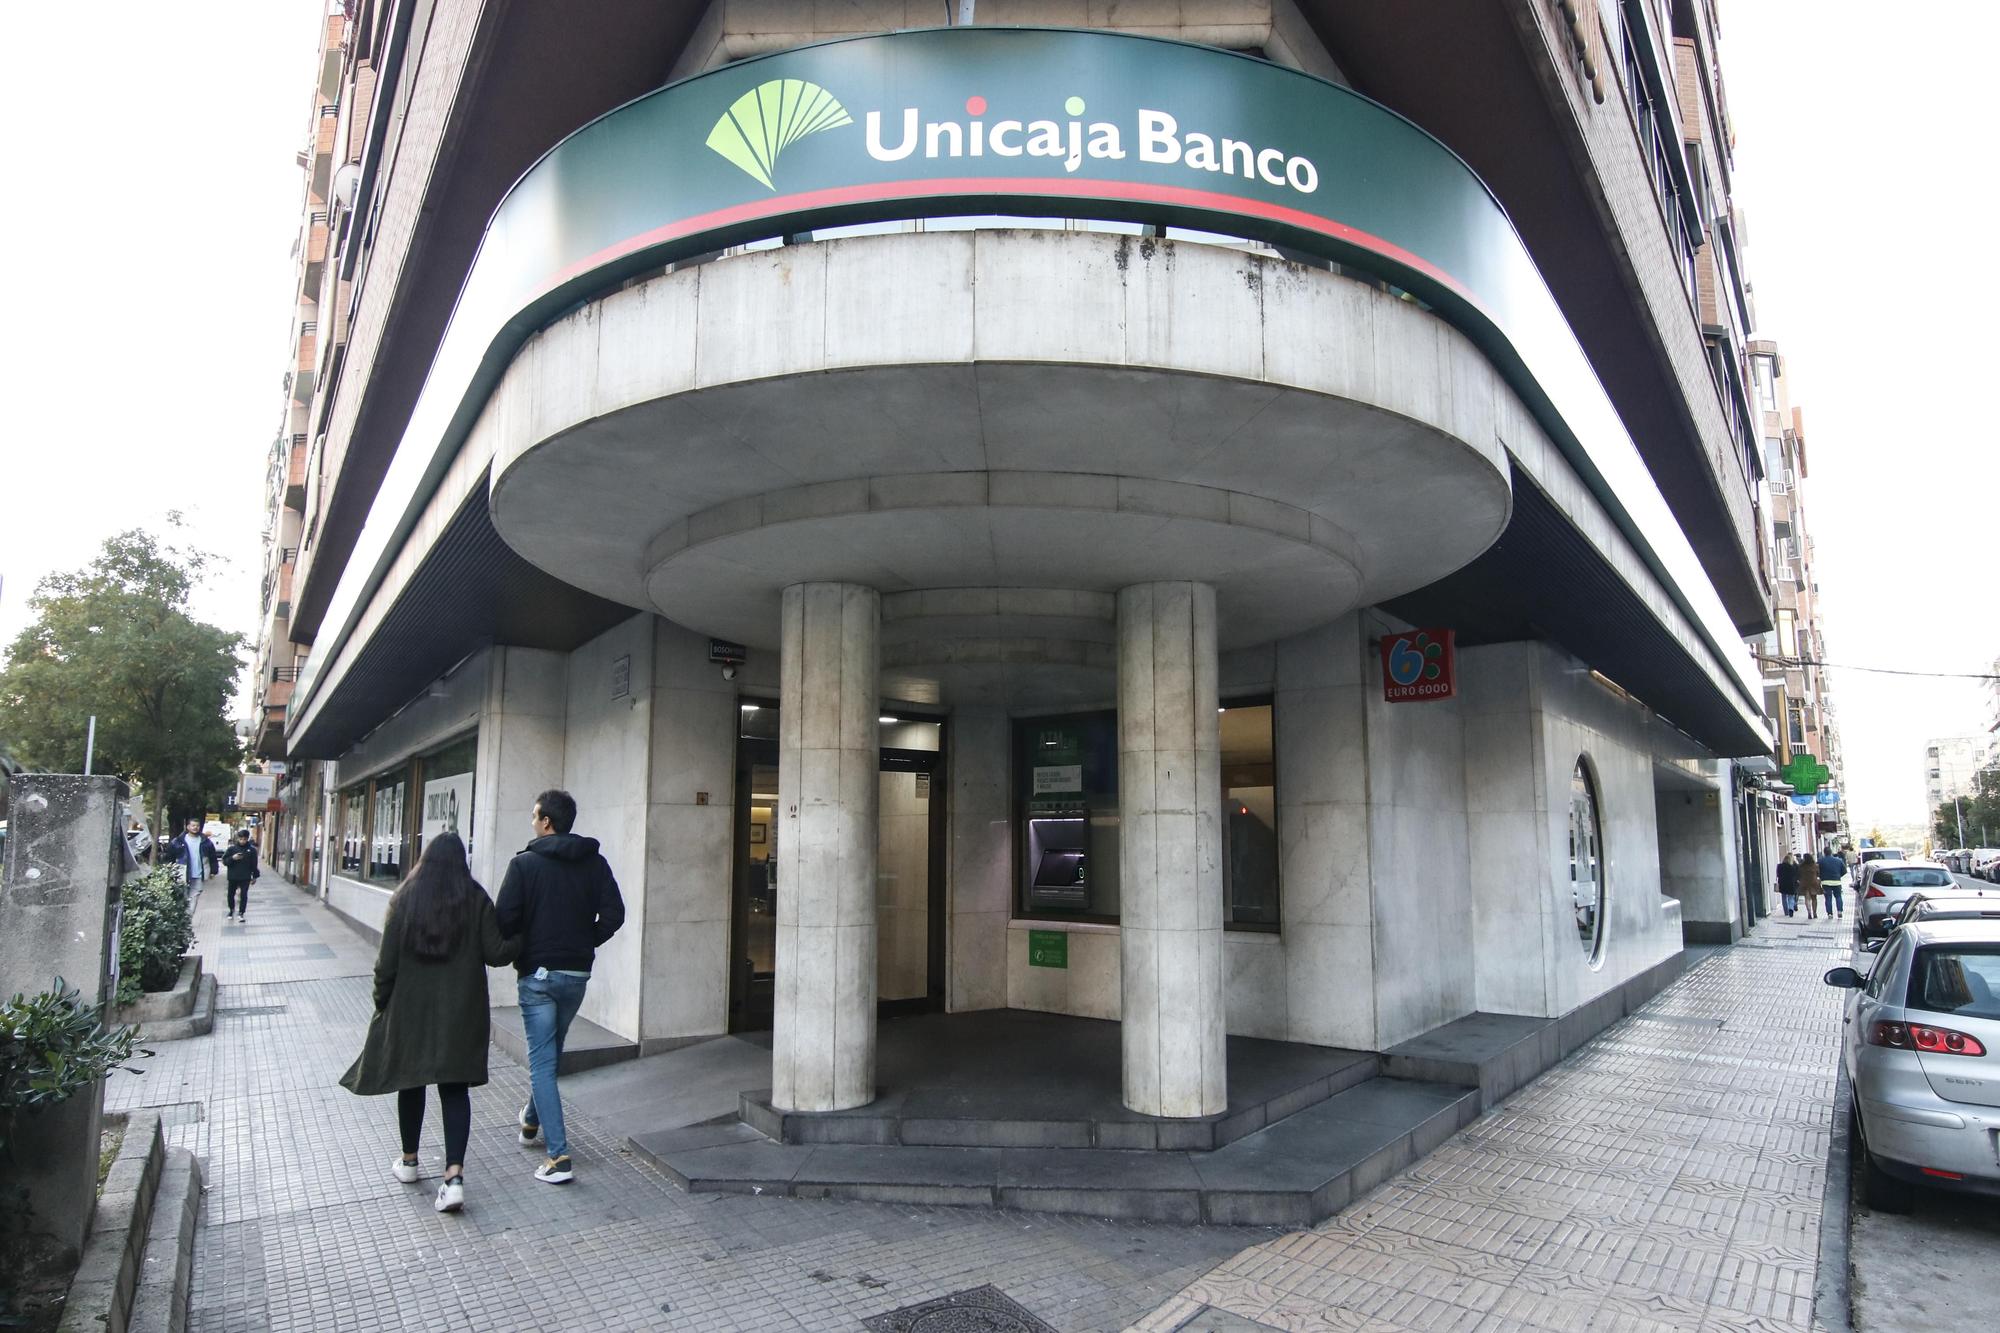 Oficina de Unicaja Banco en la avenida Virgen de Guadalupe de Cáceres.